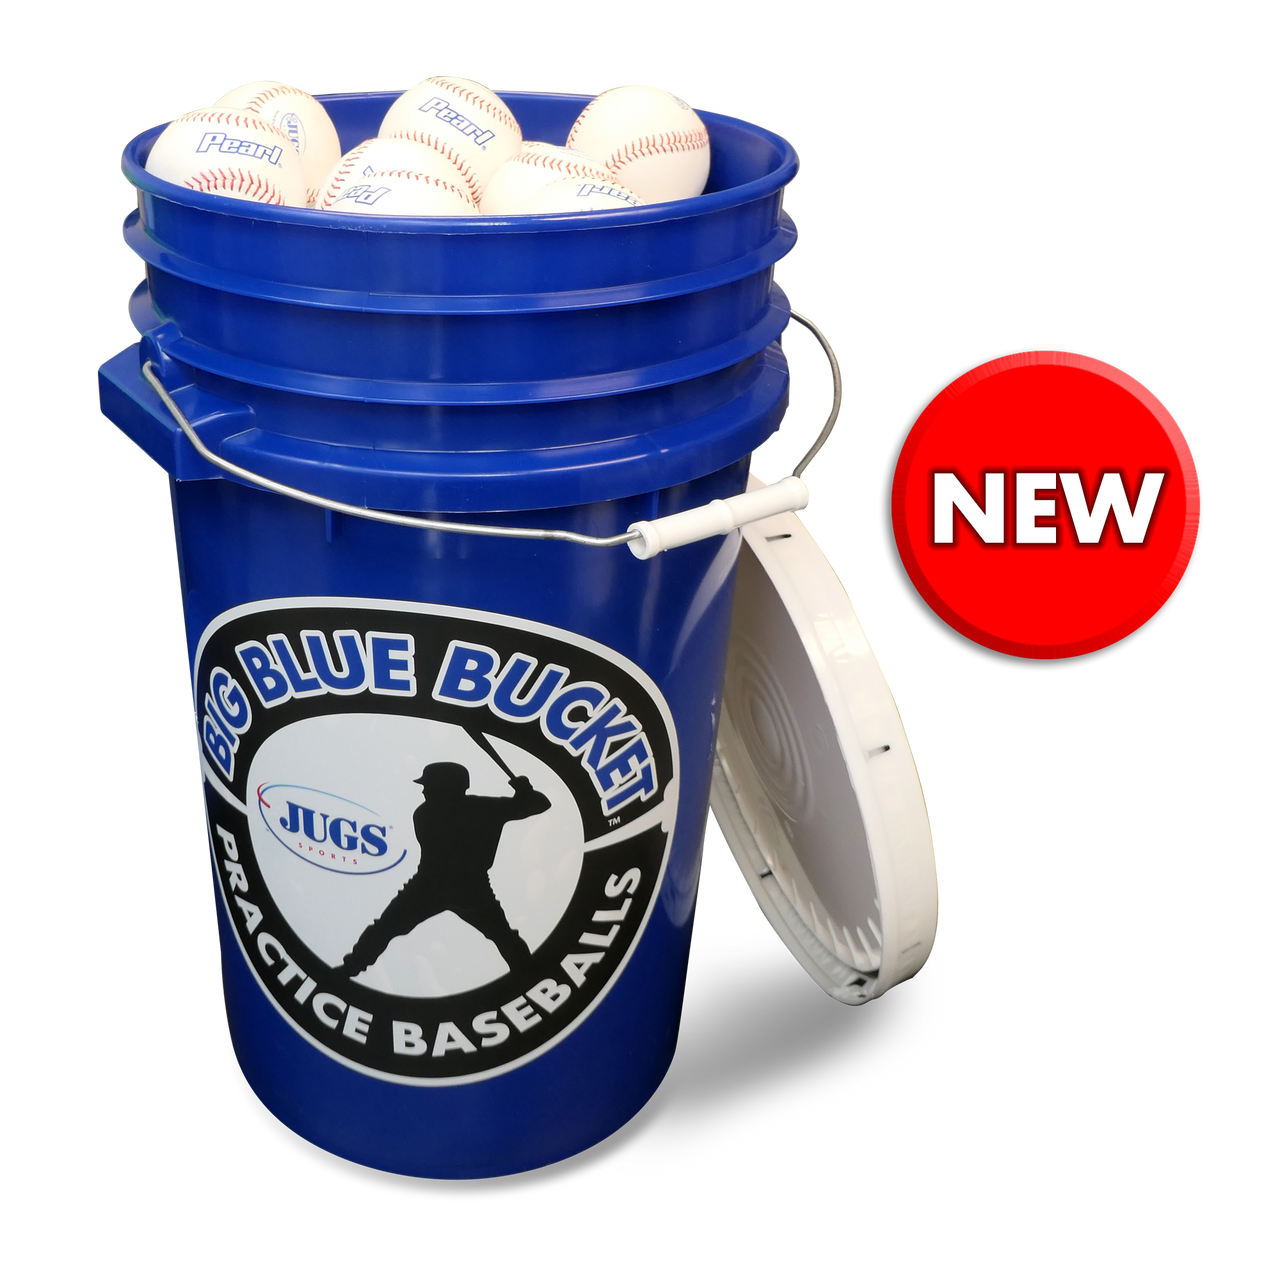 Big Blue Bucket—Pearl® Baseballs - Jugs Sports